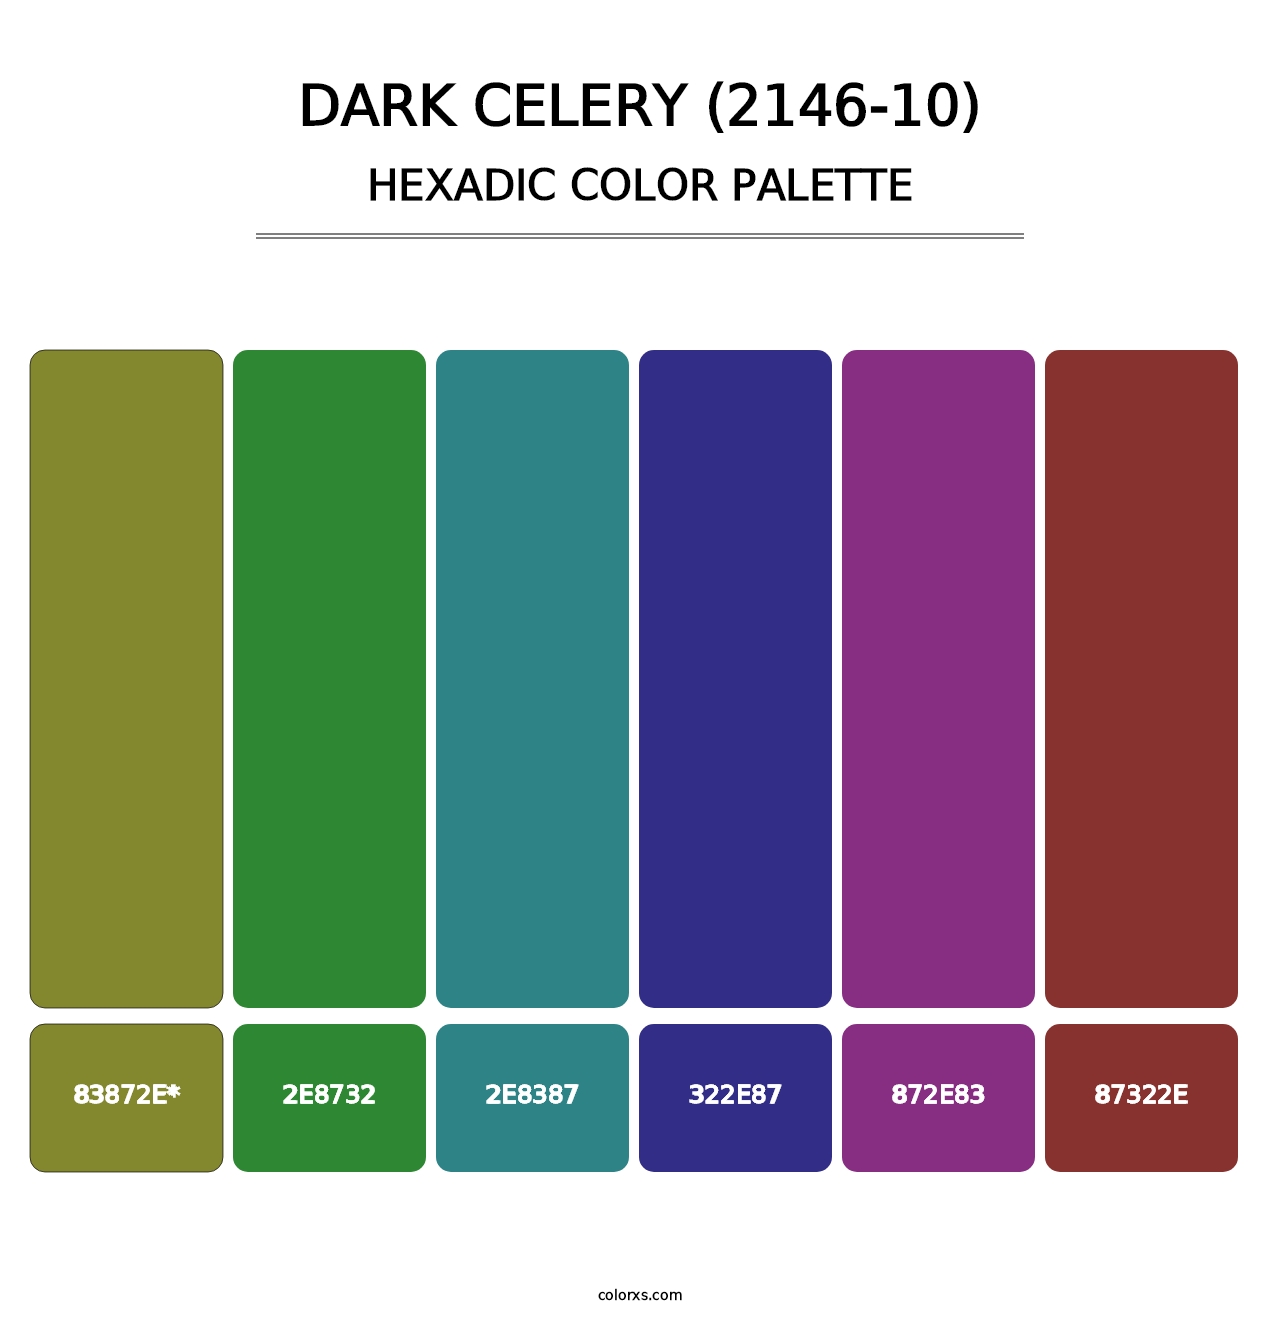 Dark Celery (2146-10) - Hexadic Color Palette